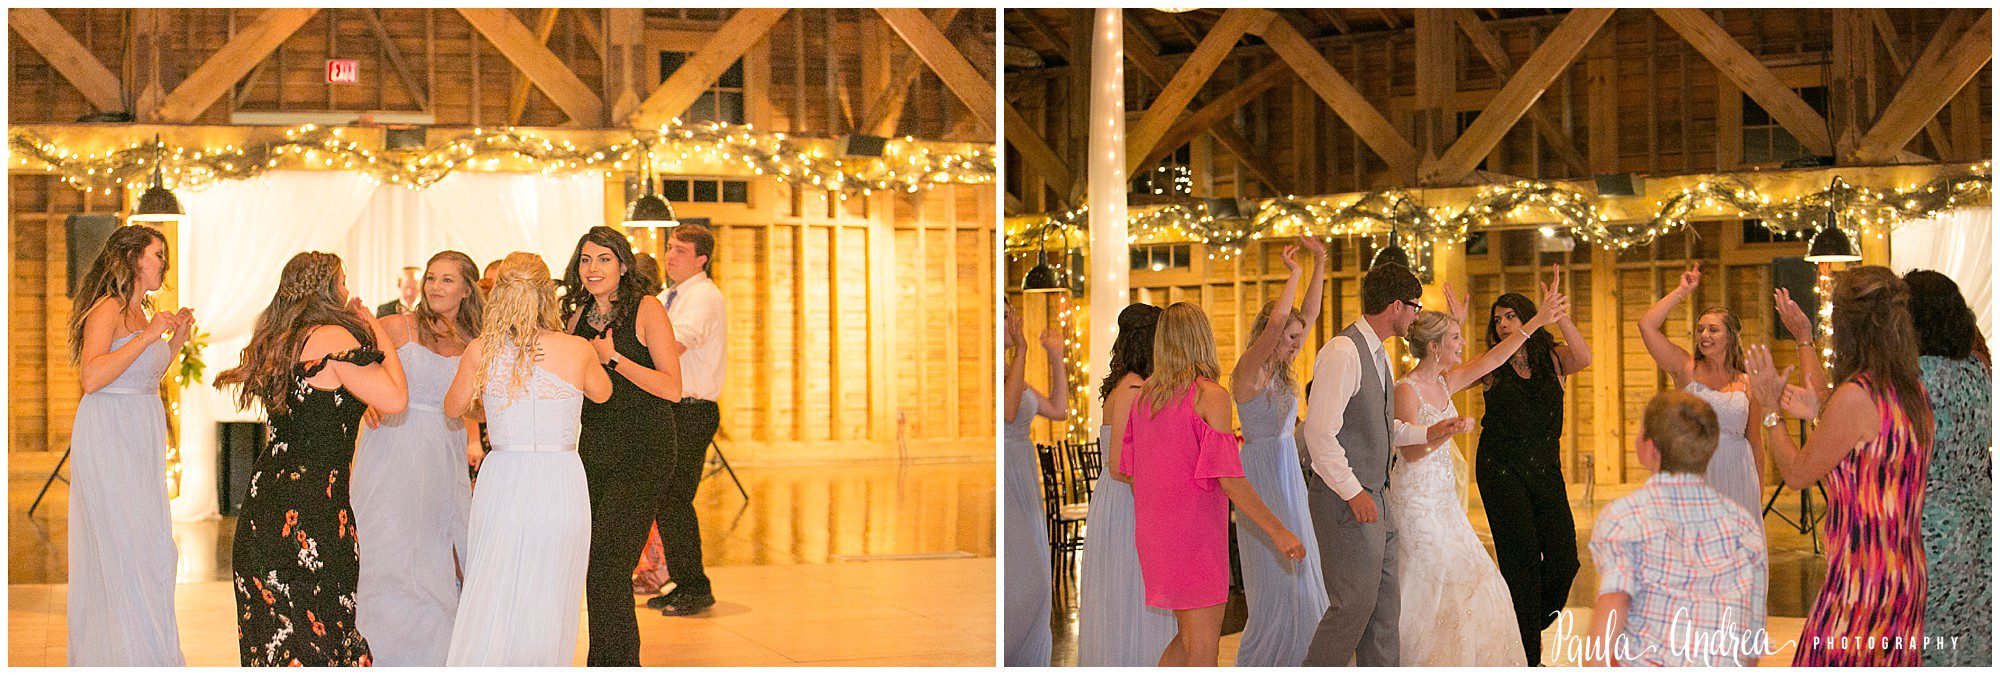 pinehurst wedding reception, pinehurst fair barn wedding, pinehurst wedding photographer, pinehurst nc wedding